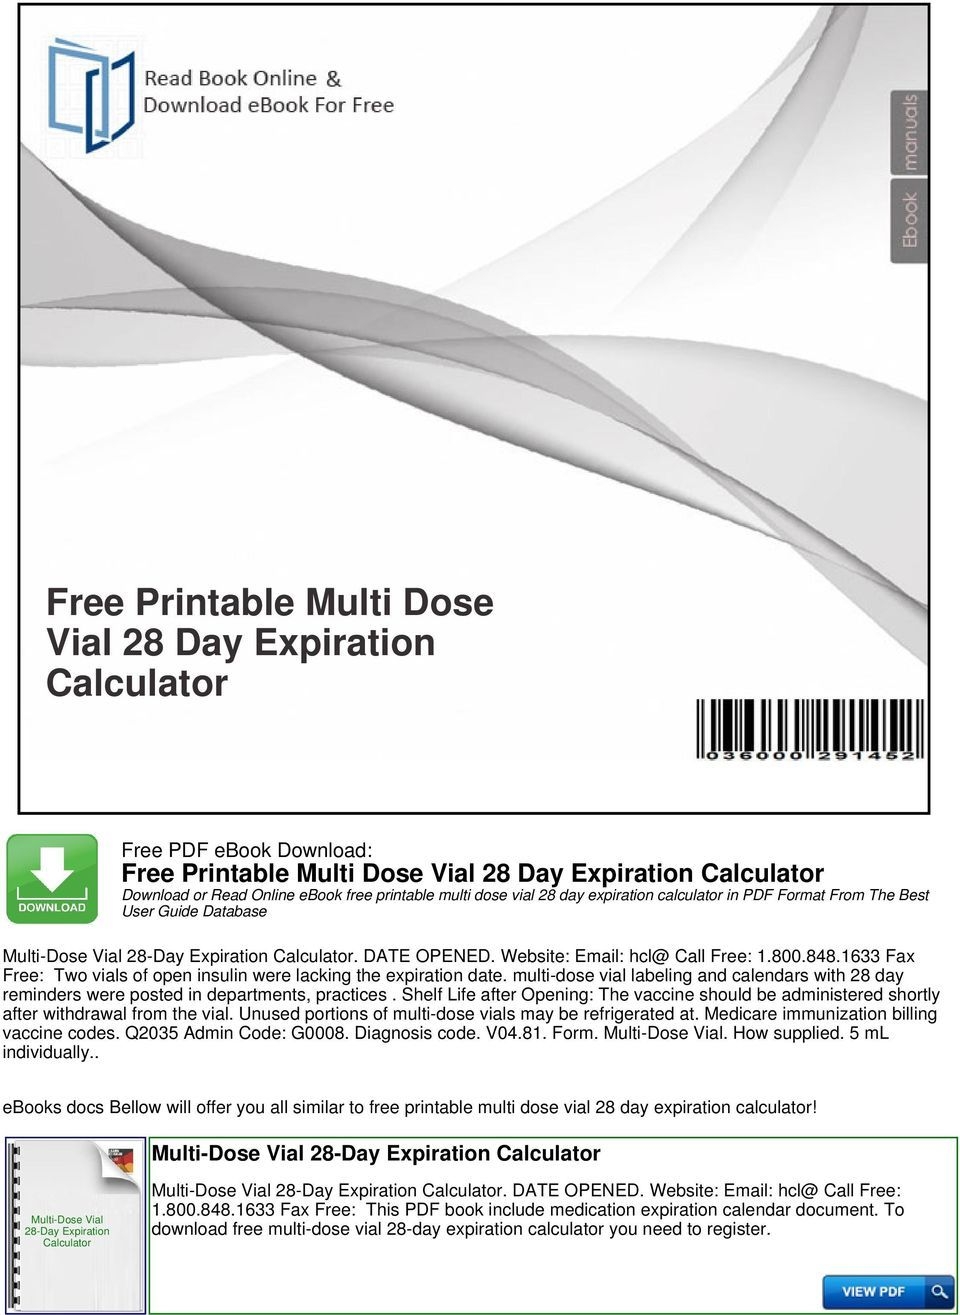 Free Printable Multi Dose Vial 28 Day Expiration Calculator